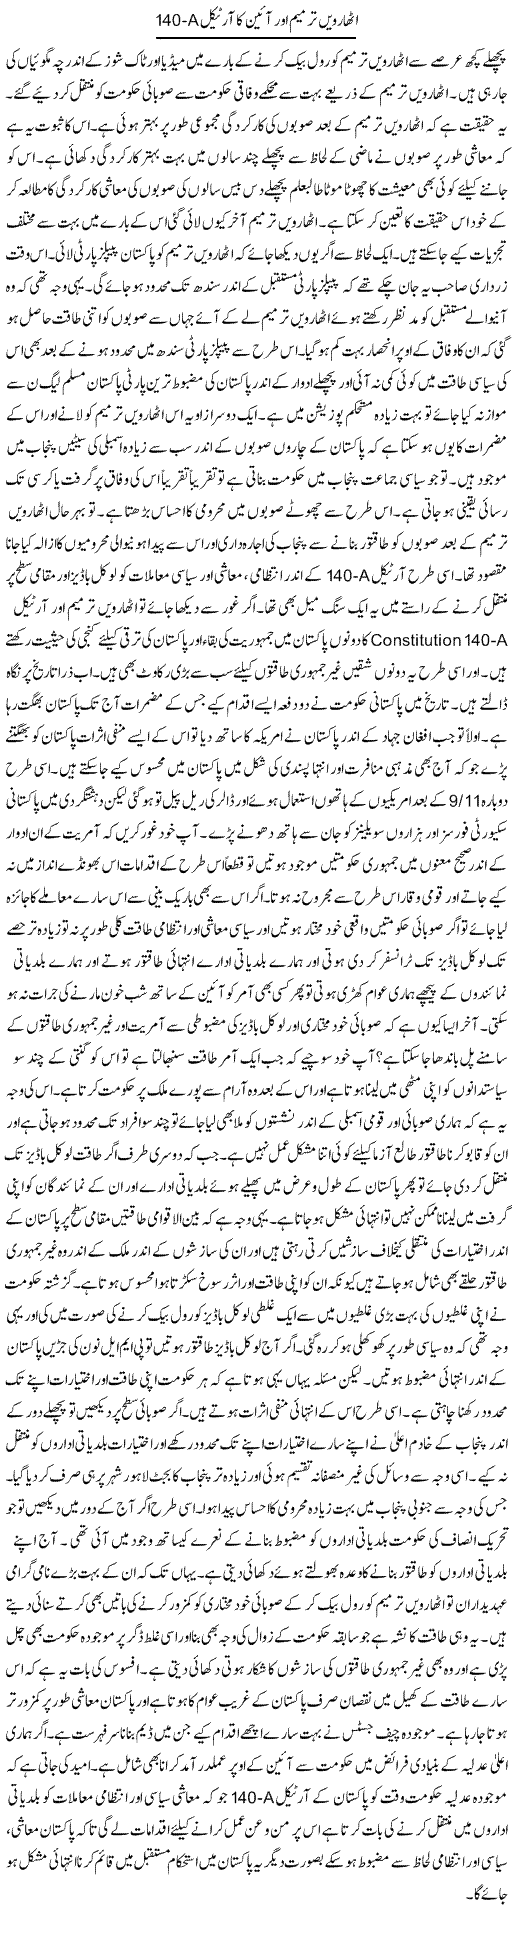 Atharwi Tarmeem Aur Aeen Ka Article 140-A | Syed Zeeshan Haider | Daily Urdu Columns